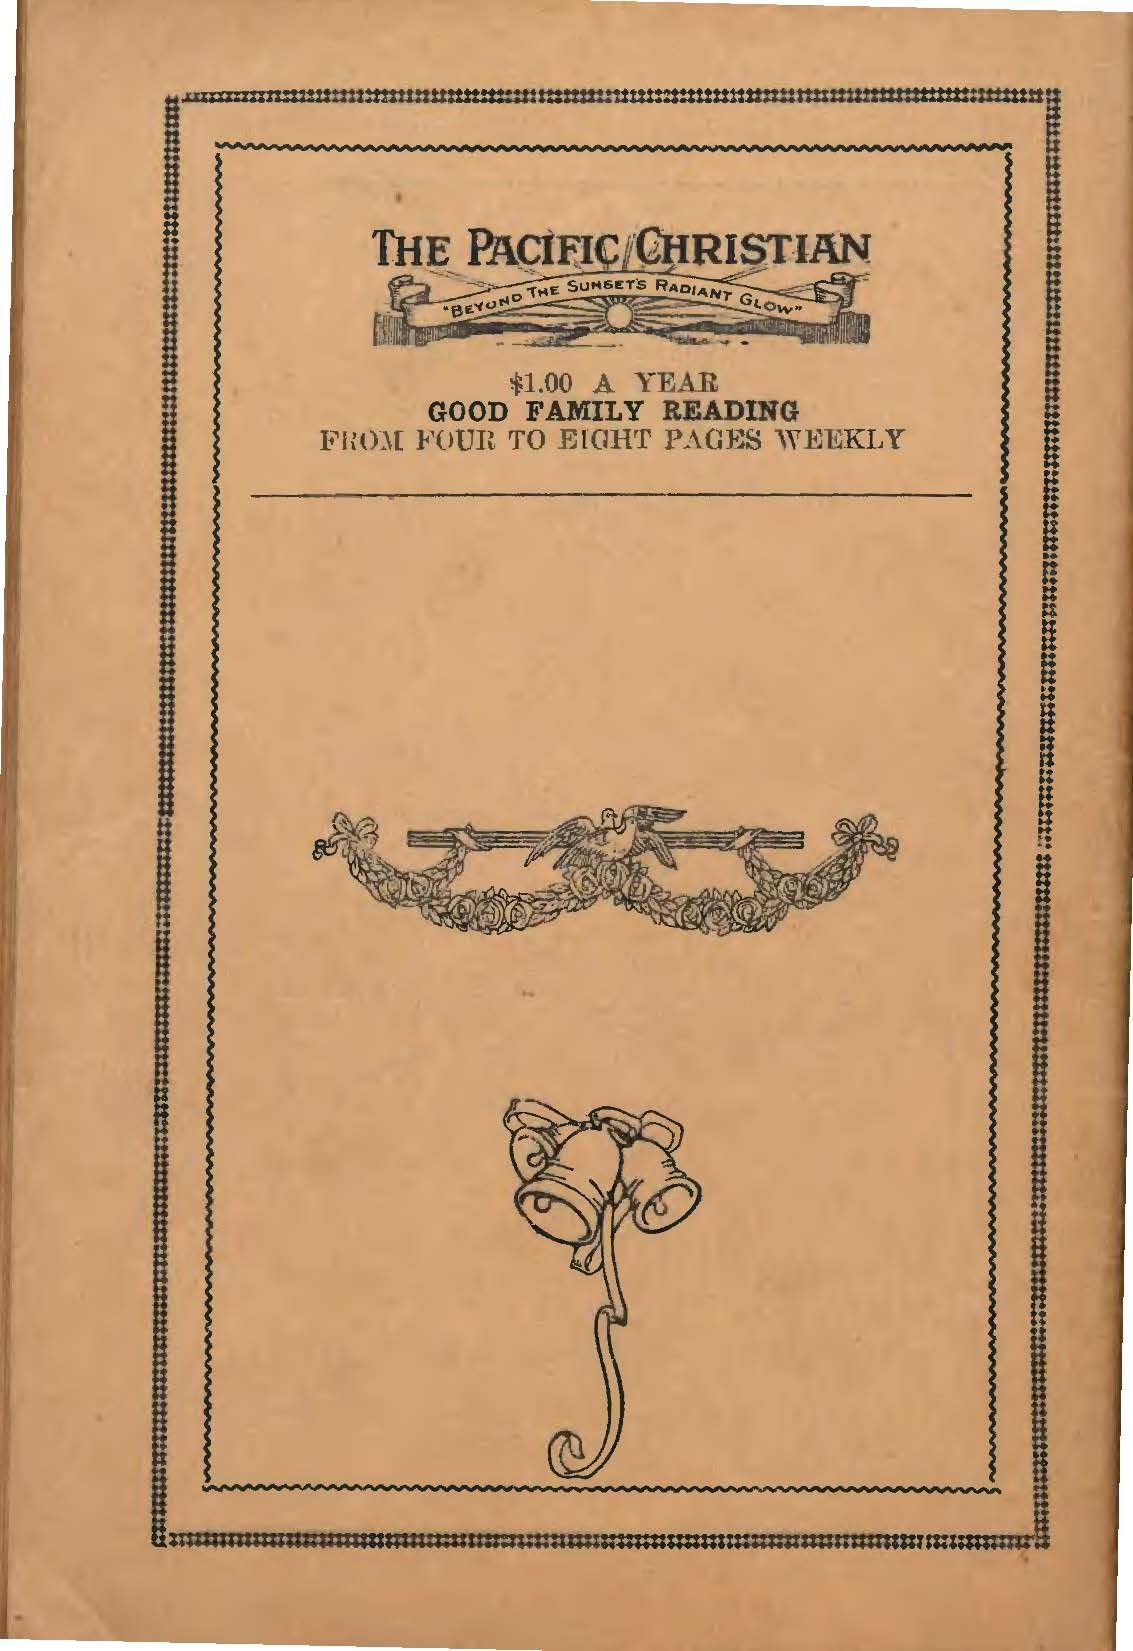 Earnest C. Love, International Melodies, 1924, rear cover